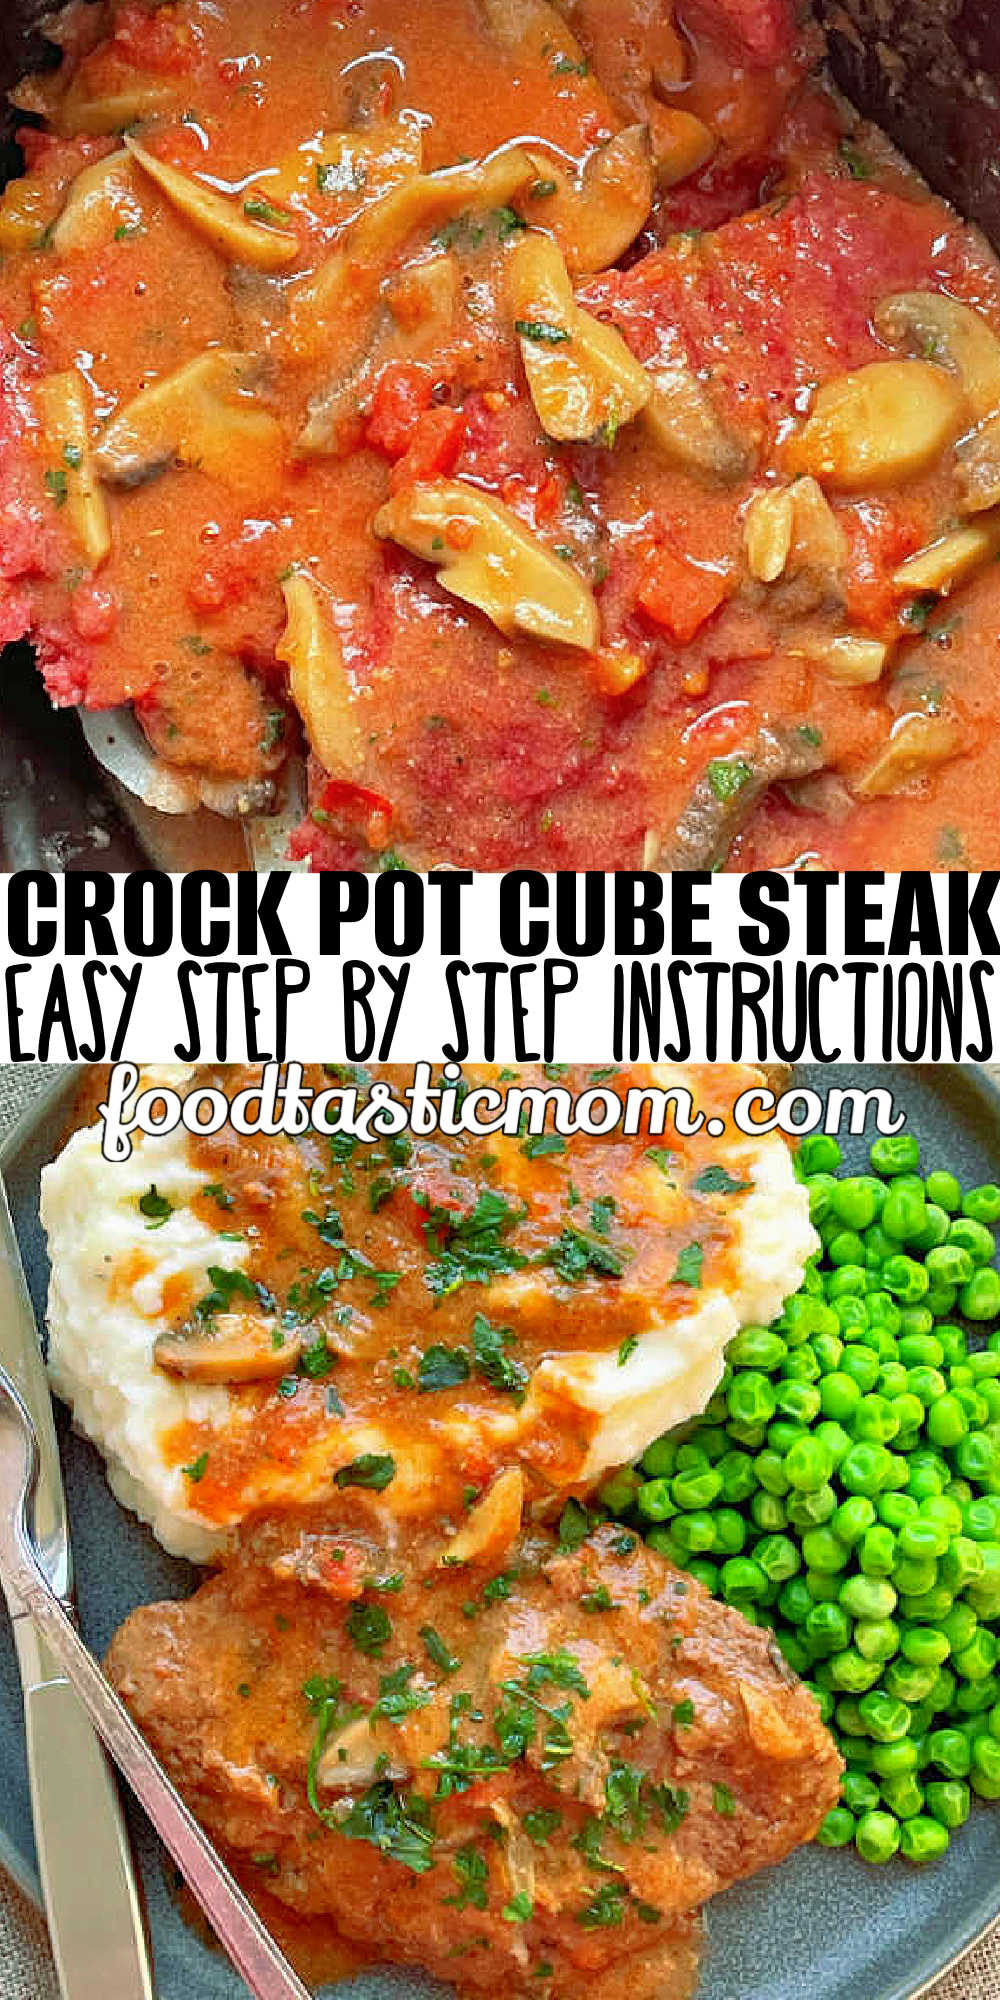 Crock Pot Cube Steak uses all natural ingredients (no envelopes) to make the most tender steak and luscious mushroom gravy. via @foodtasticmom